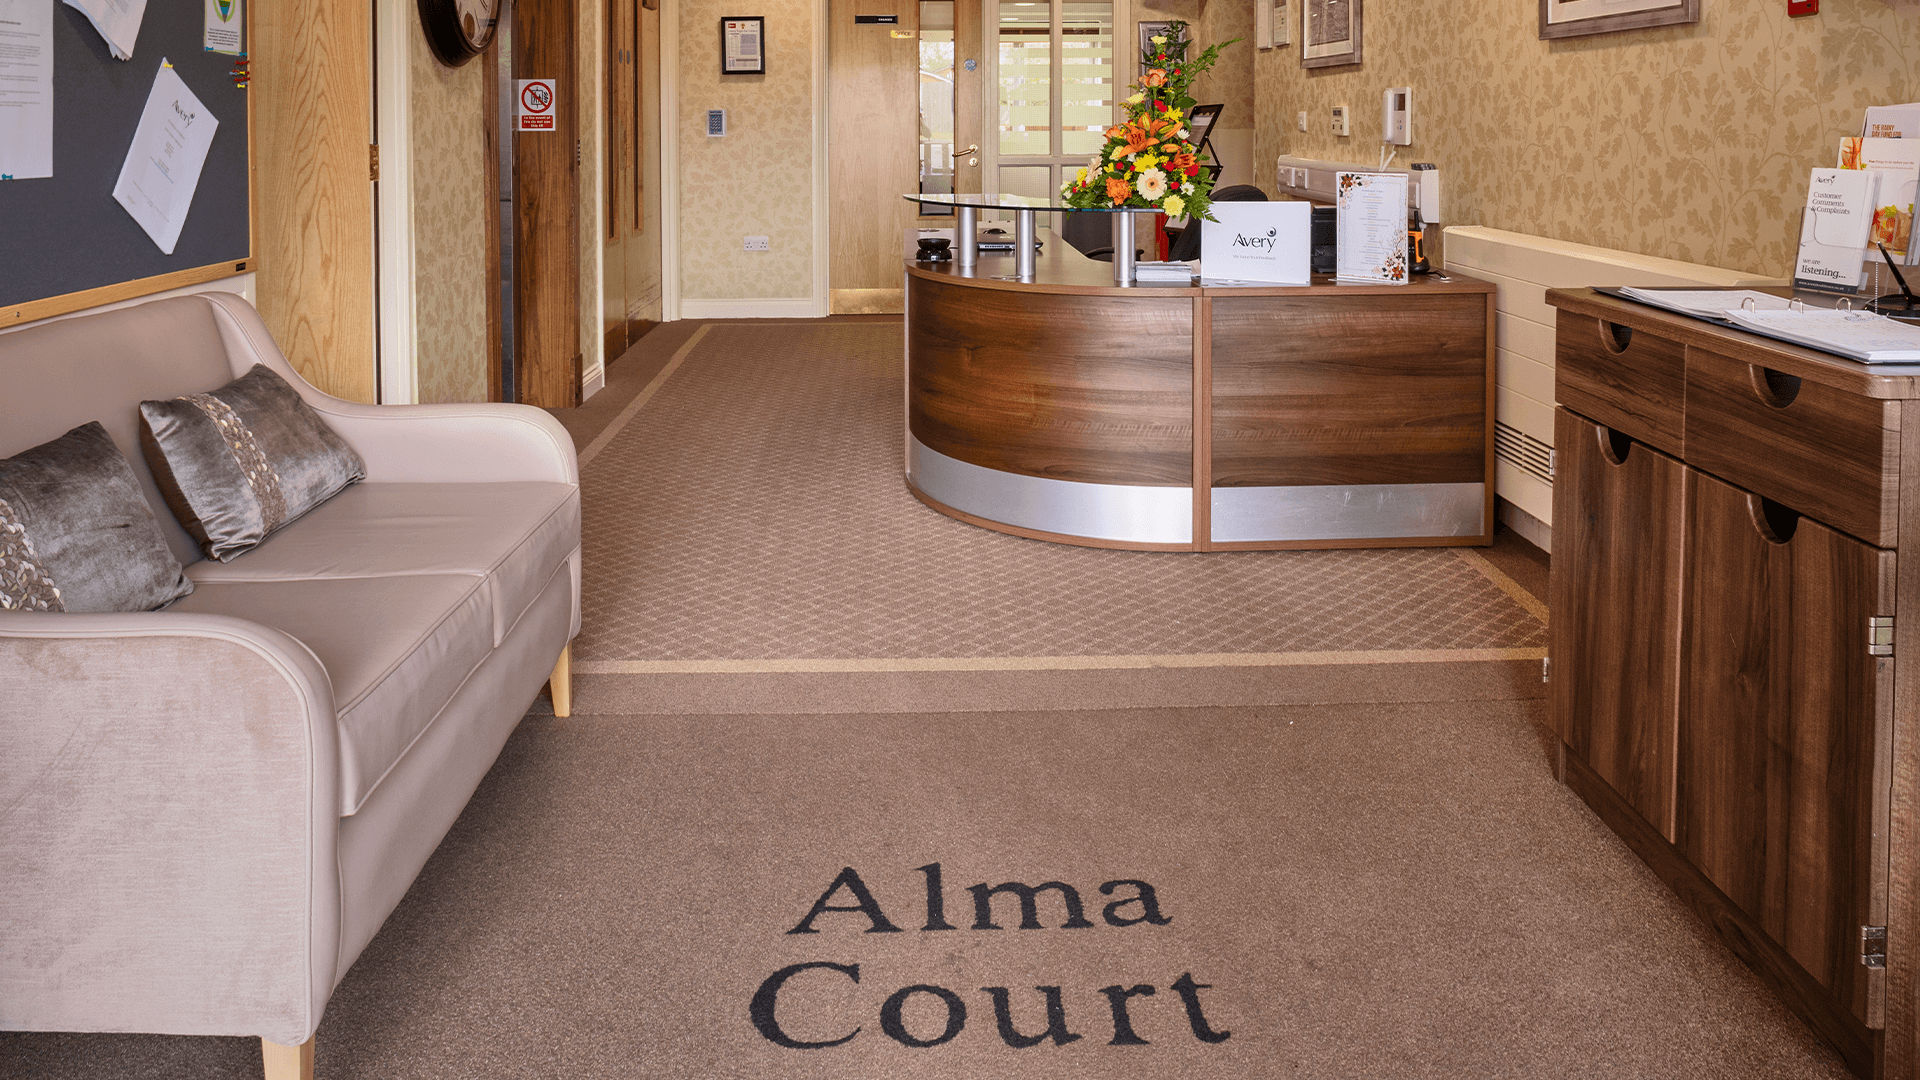 Alma Court reception